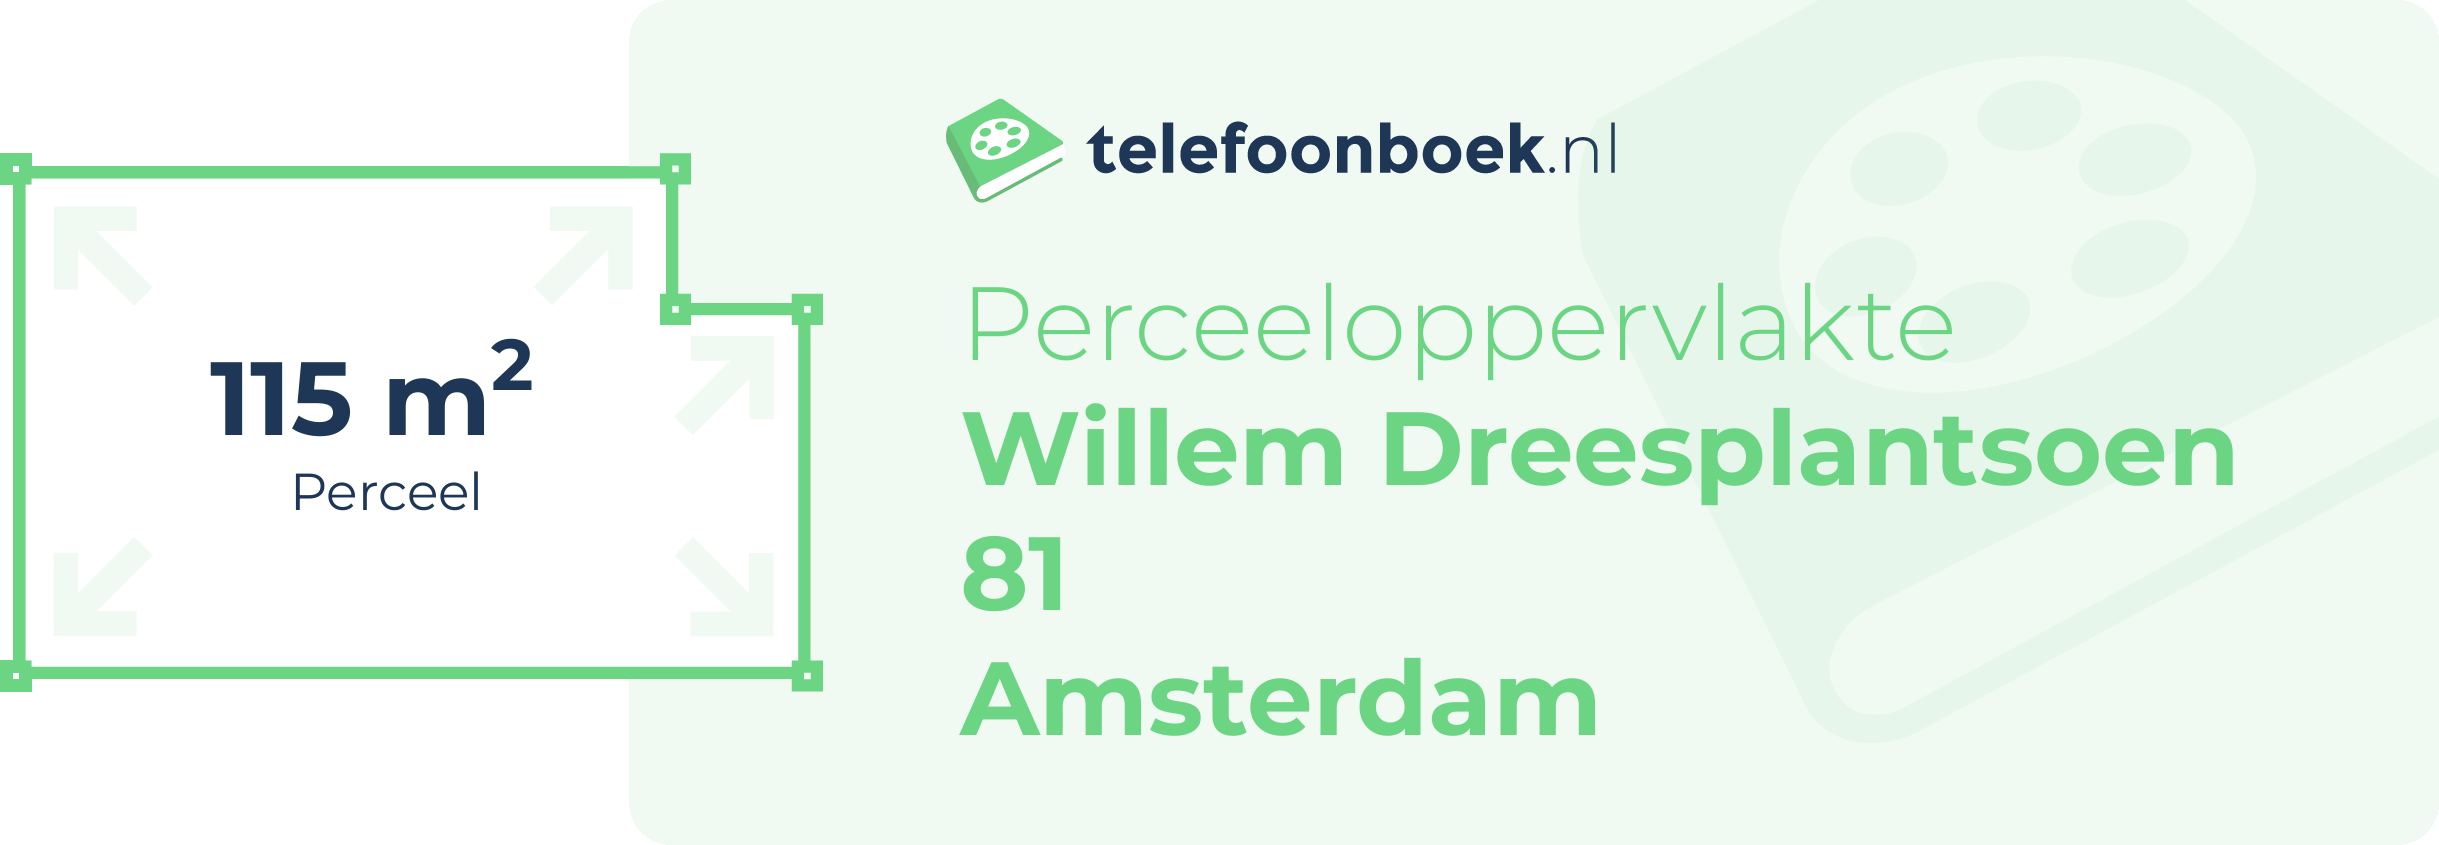 Perceeloppervlakte Willem Dreesplantsoen 81 Amsterdam